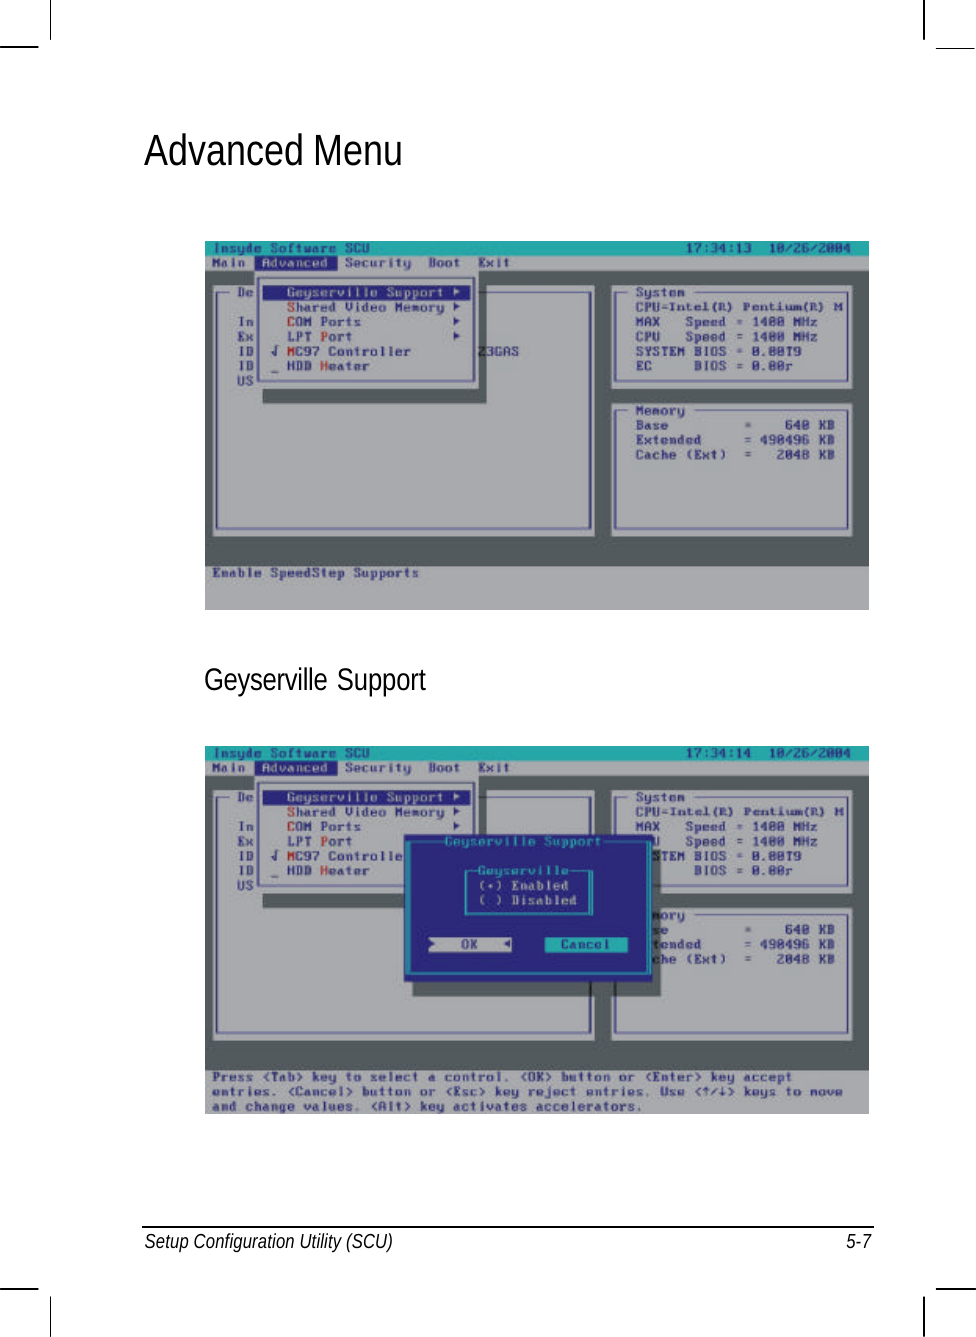  Setup Configuration Utility (SCU) 5-7 Advanced Menu  Geyserville Support   